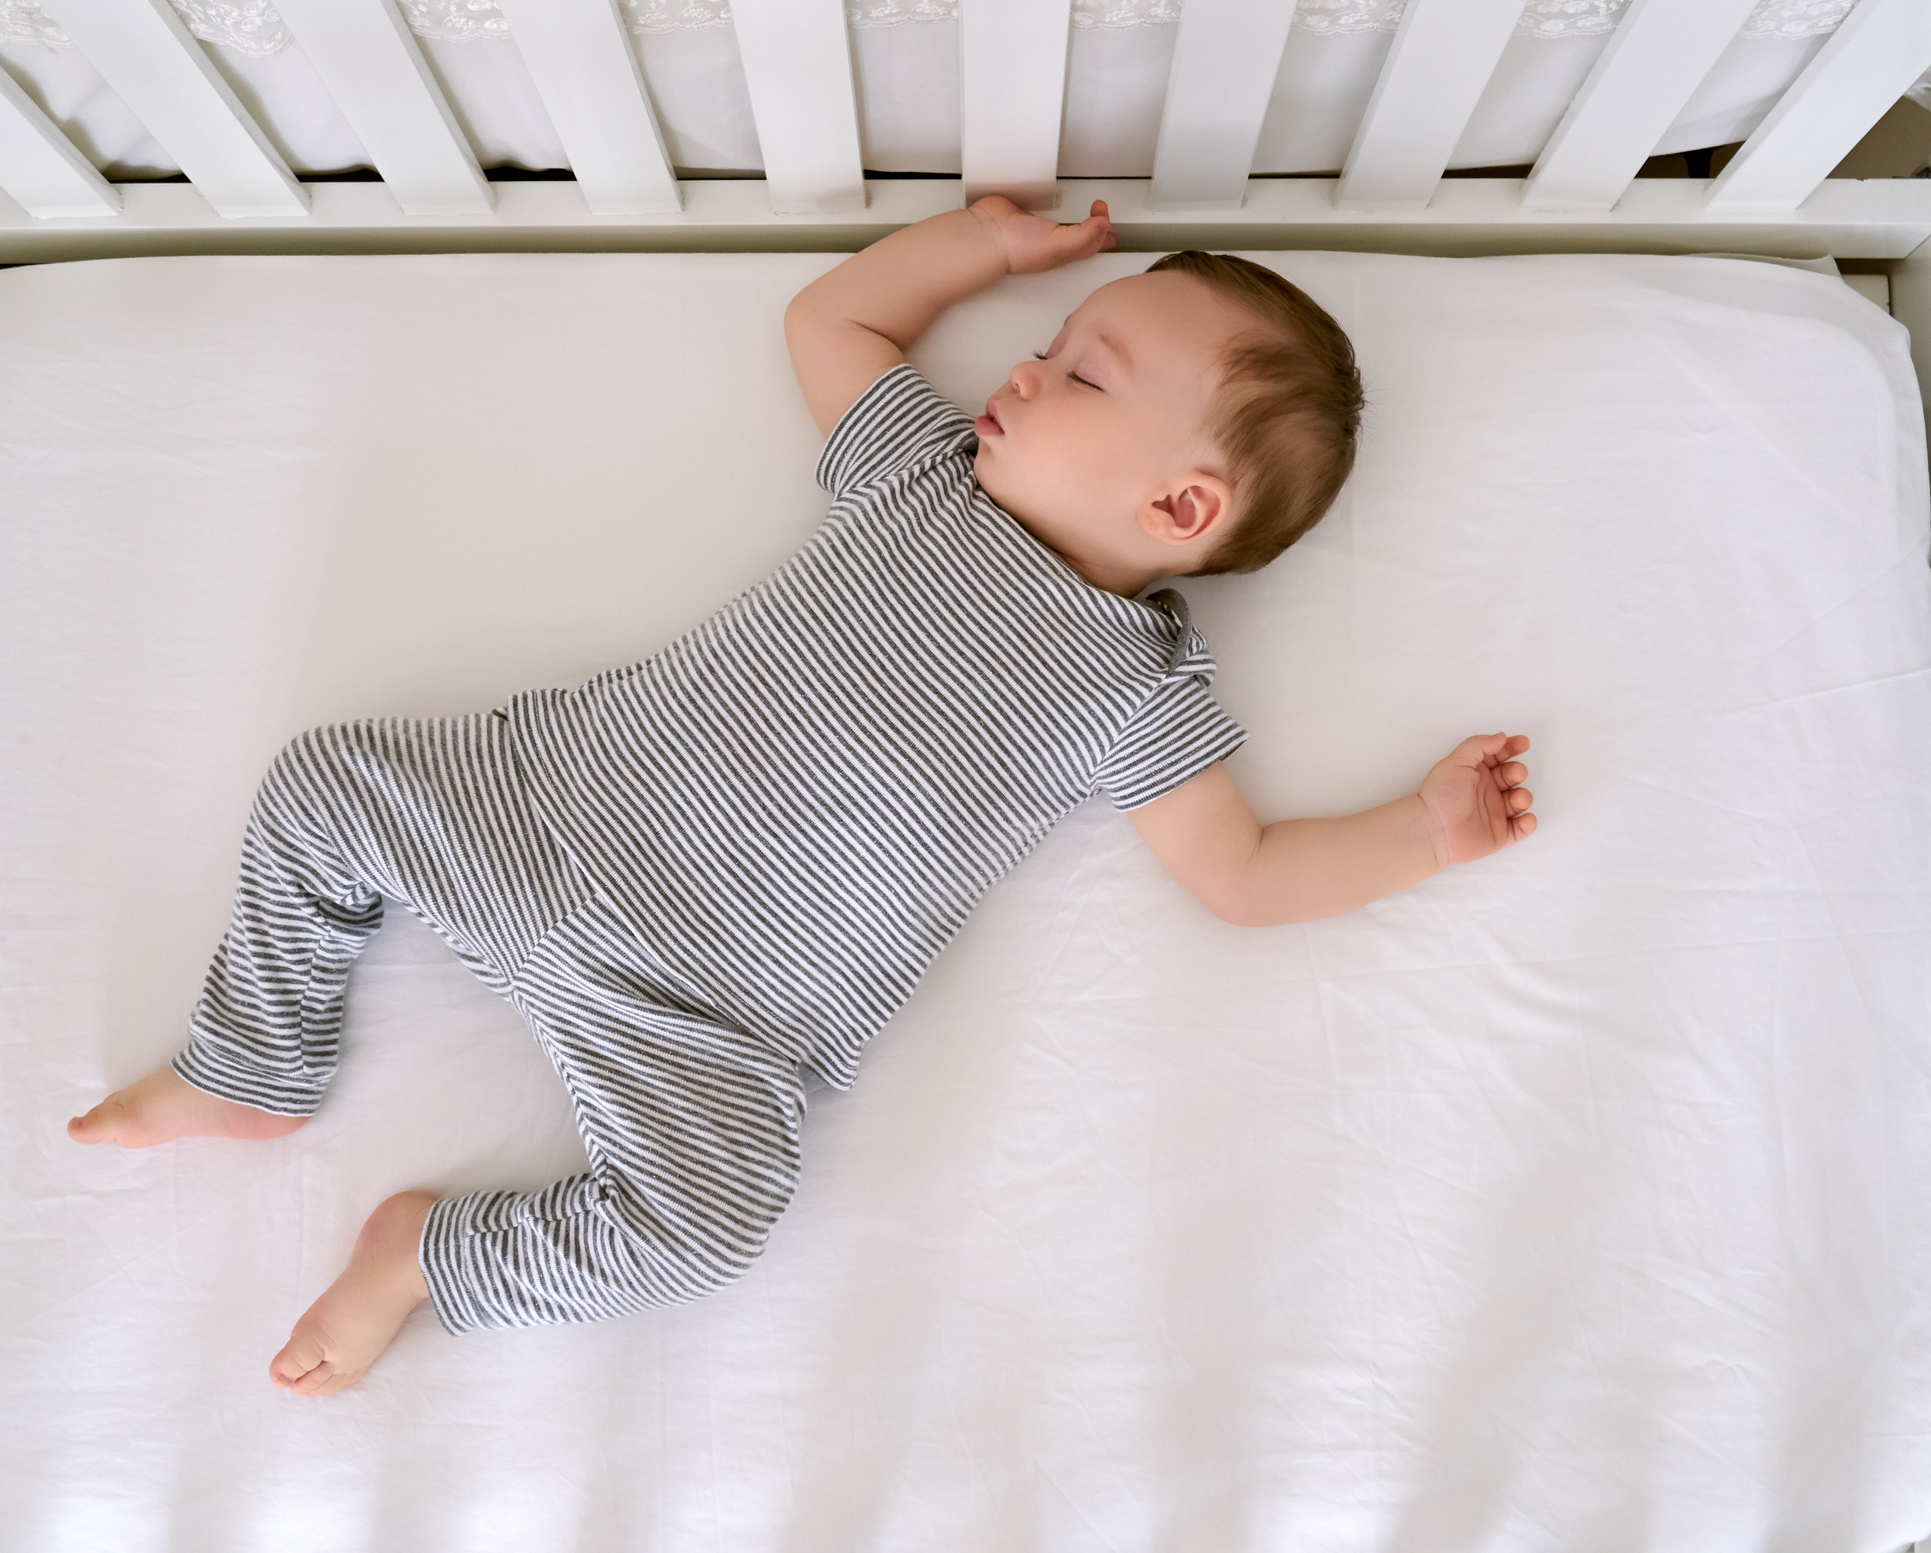 A baby sleeps in a crib